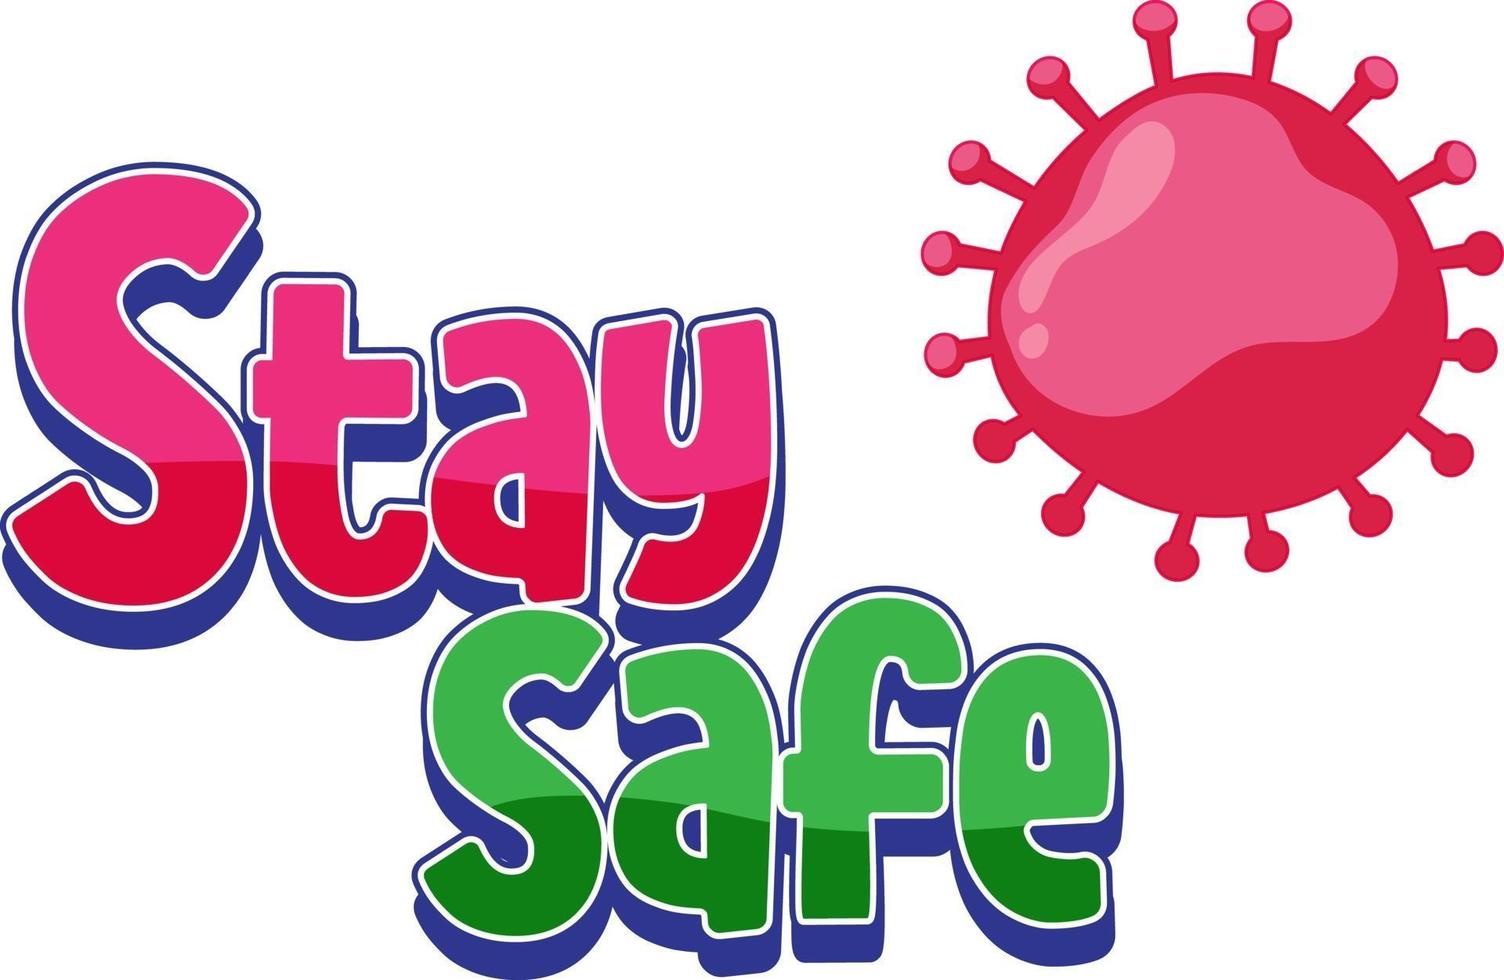 Stay Safe logo with coronavirus icon isolated on white background vector